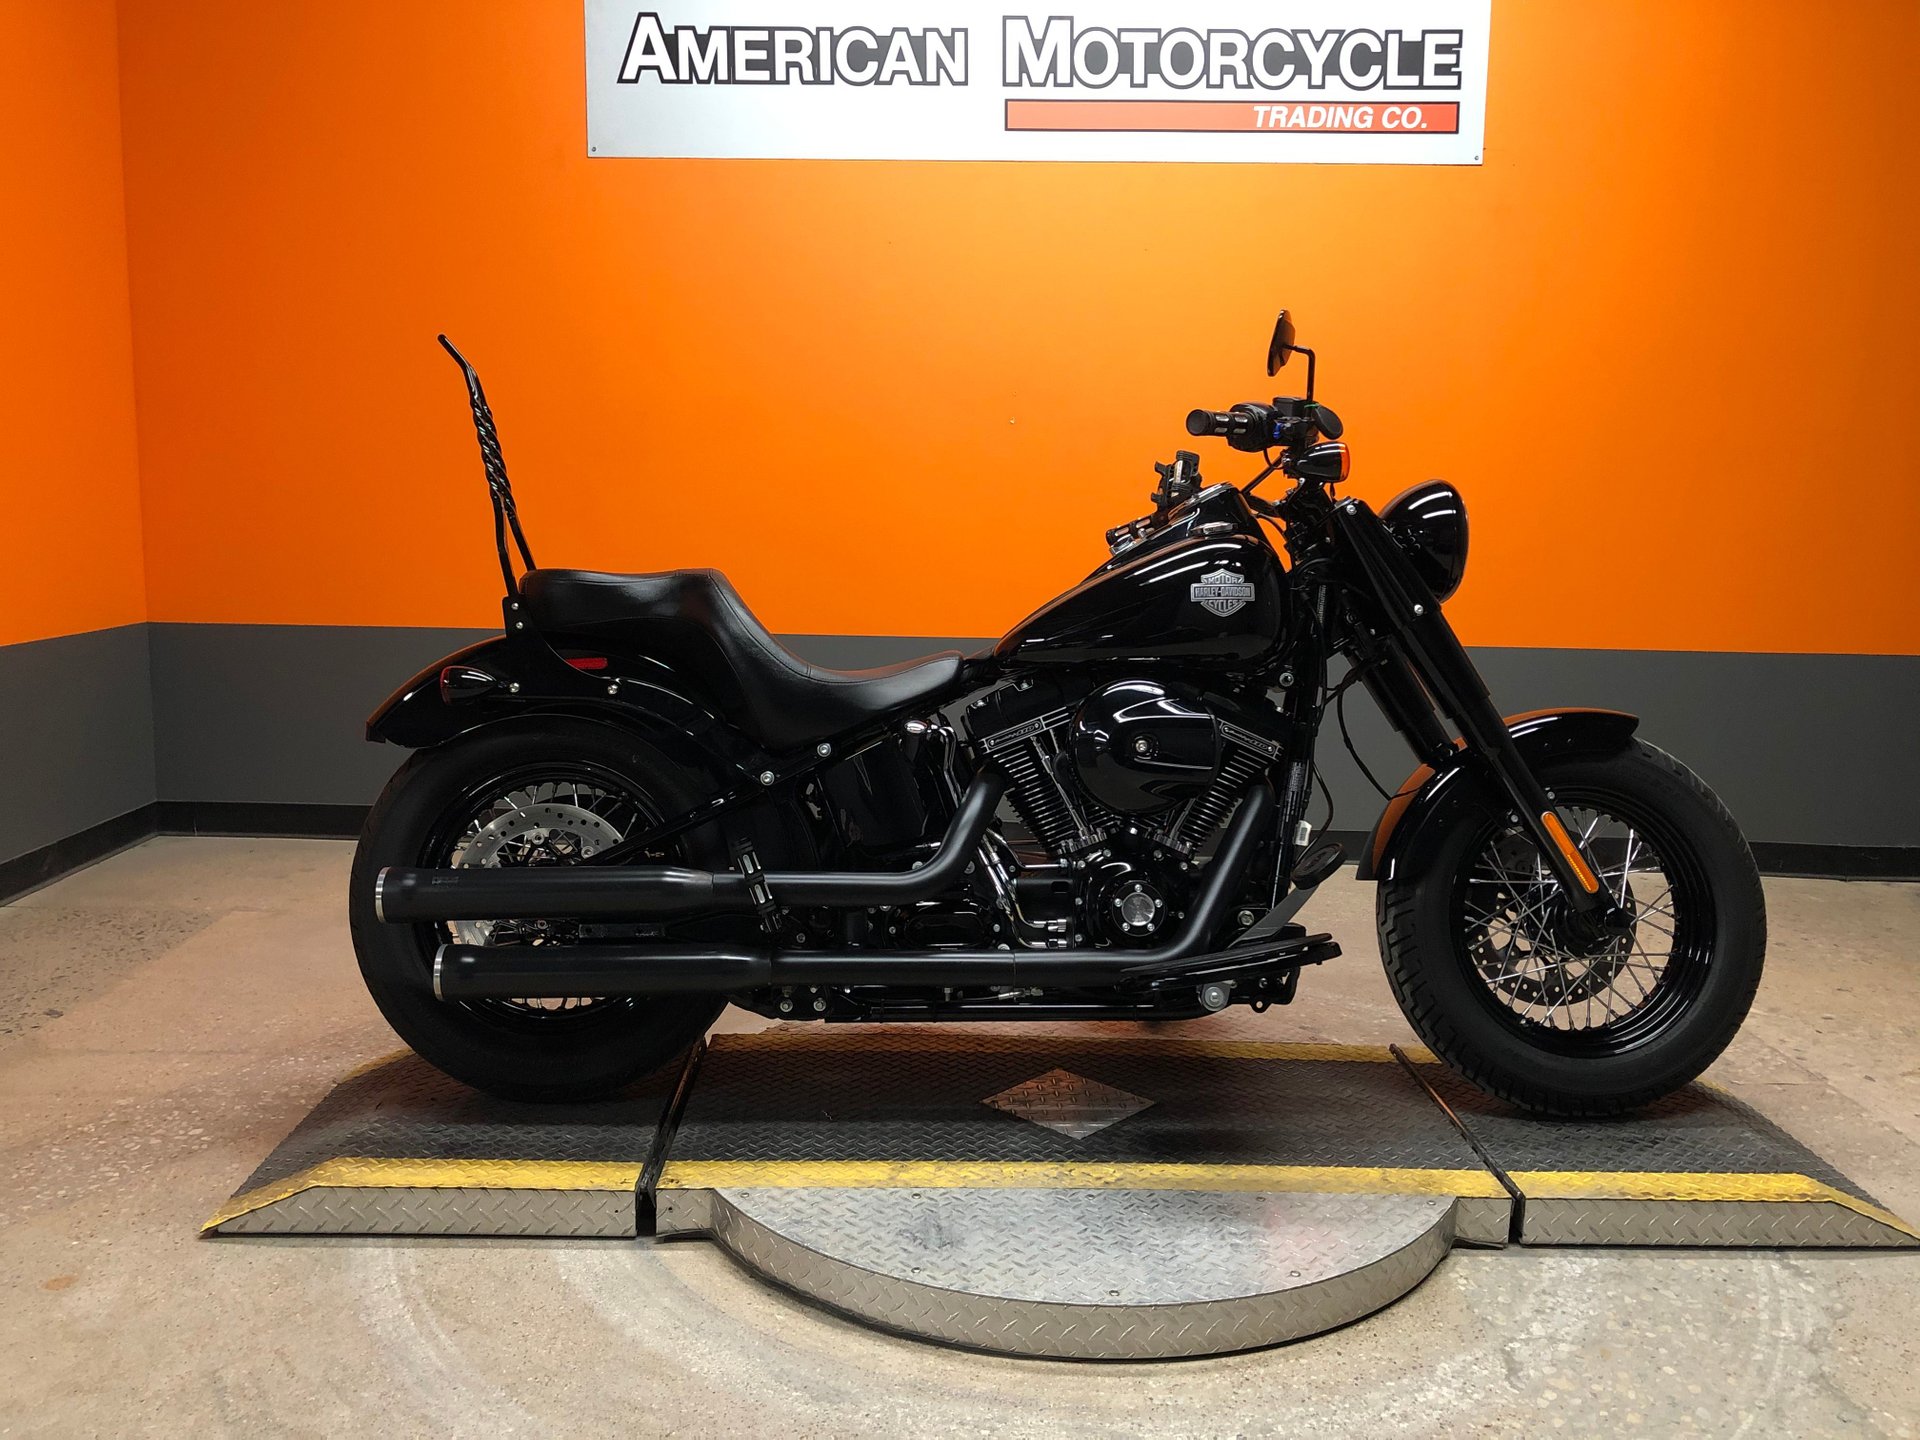 2017 Harley Davidson Softail Slim American Motorcycle Trading Company Used Harley Davidson Motorcycles